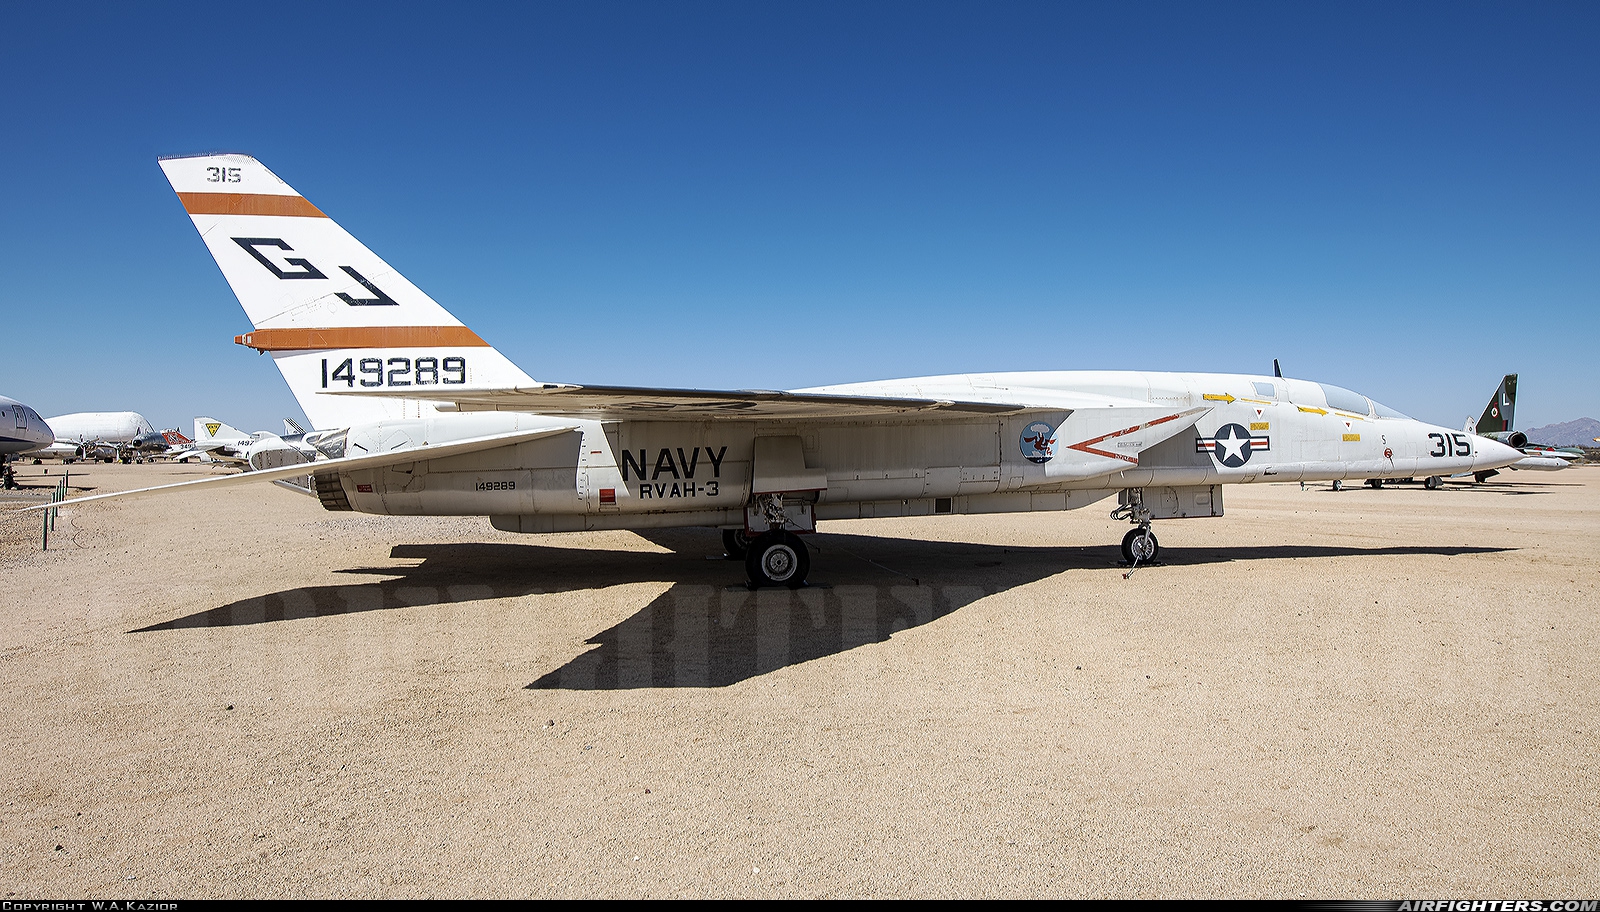 USA - Navy North American RA-5C Vigilante 149289 at Tucson - Pima Air and Space Museum, USA